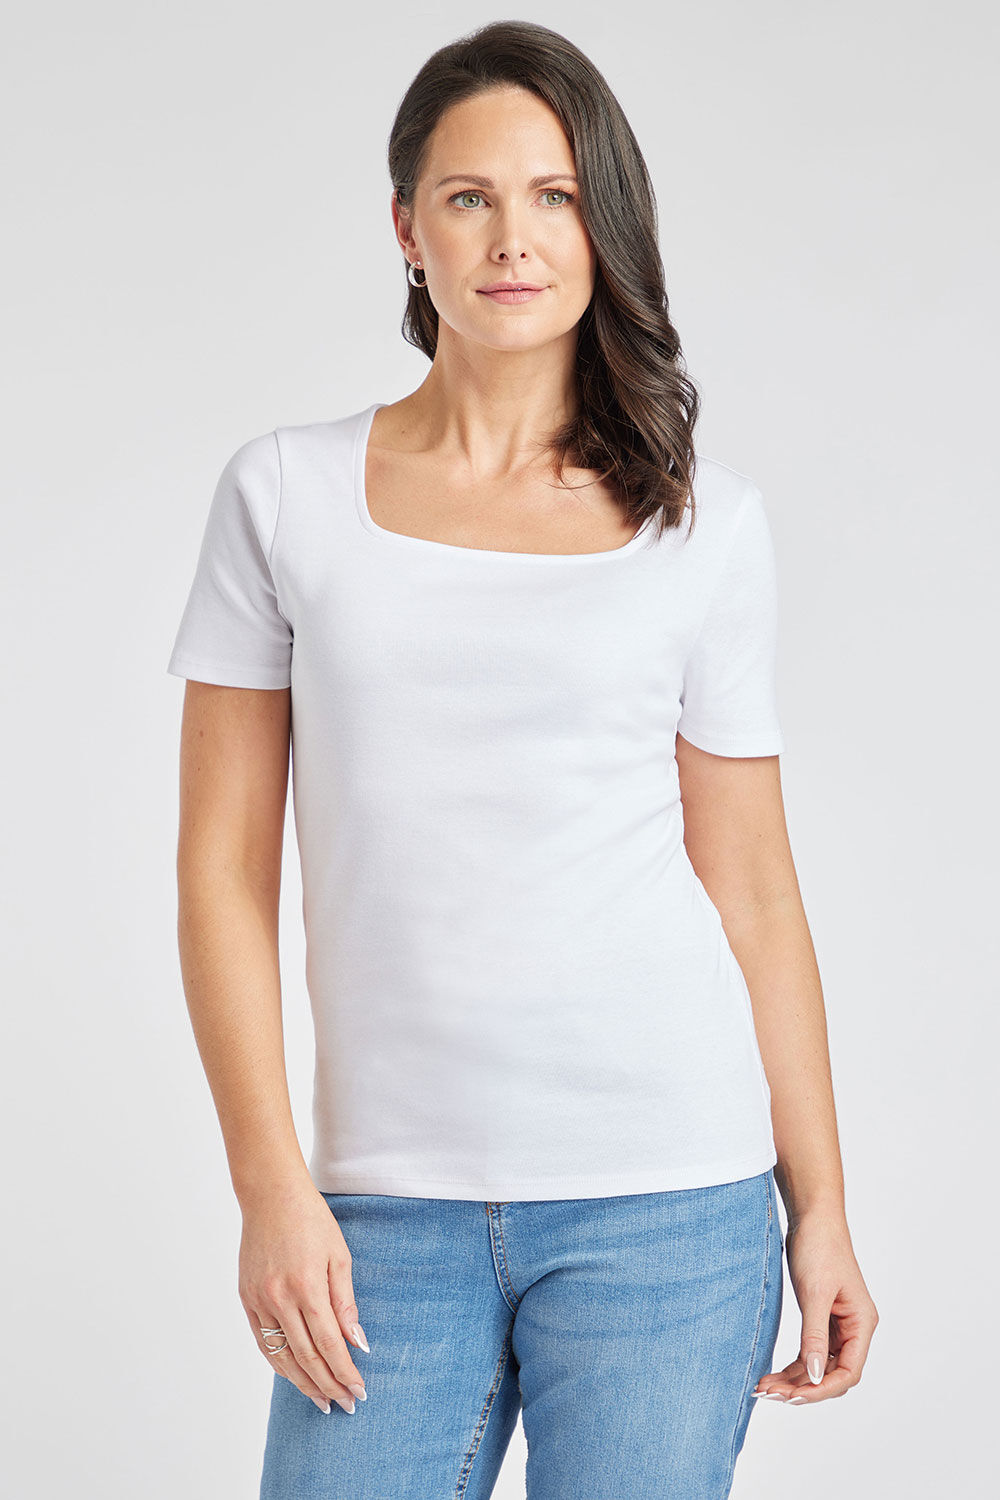 Bonmarche White Square Neck Plain T-Shirt, Size: 20